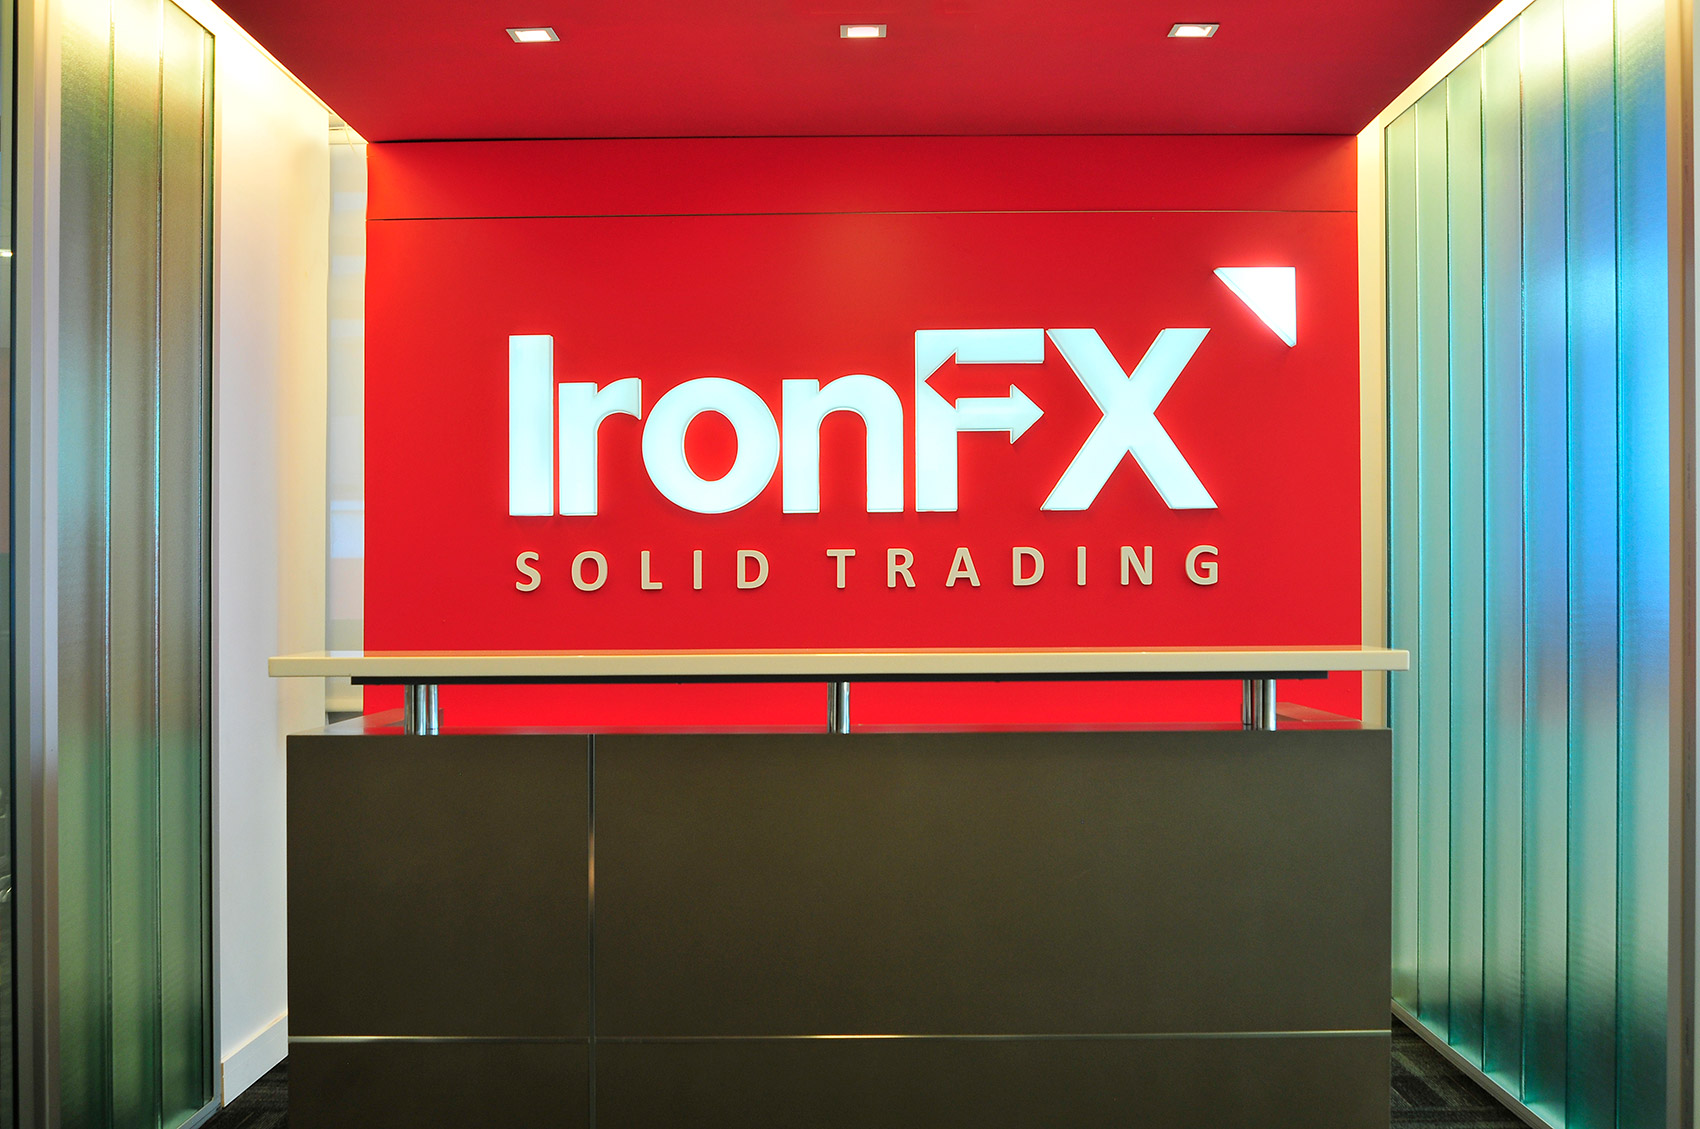 Oficina IronFX